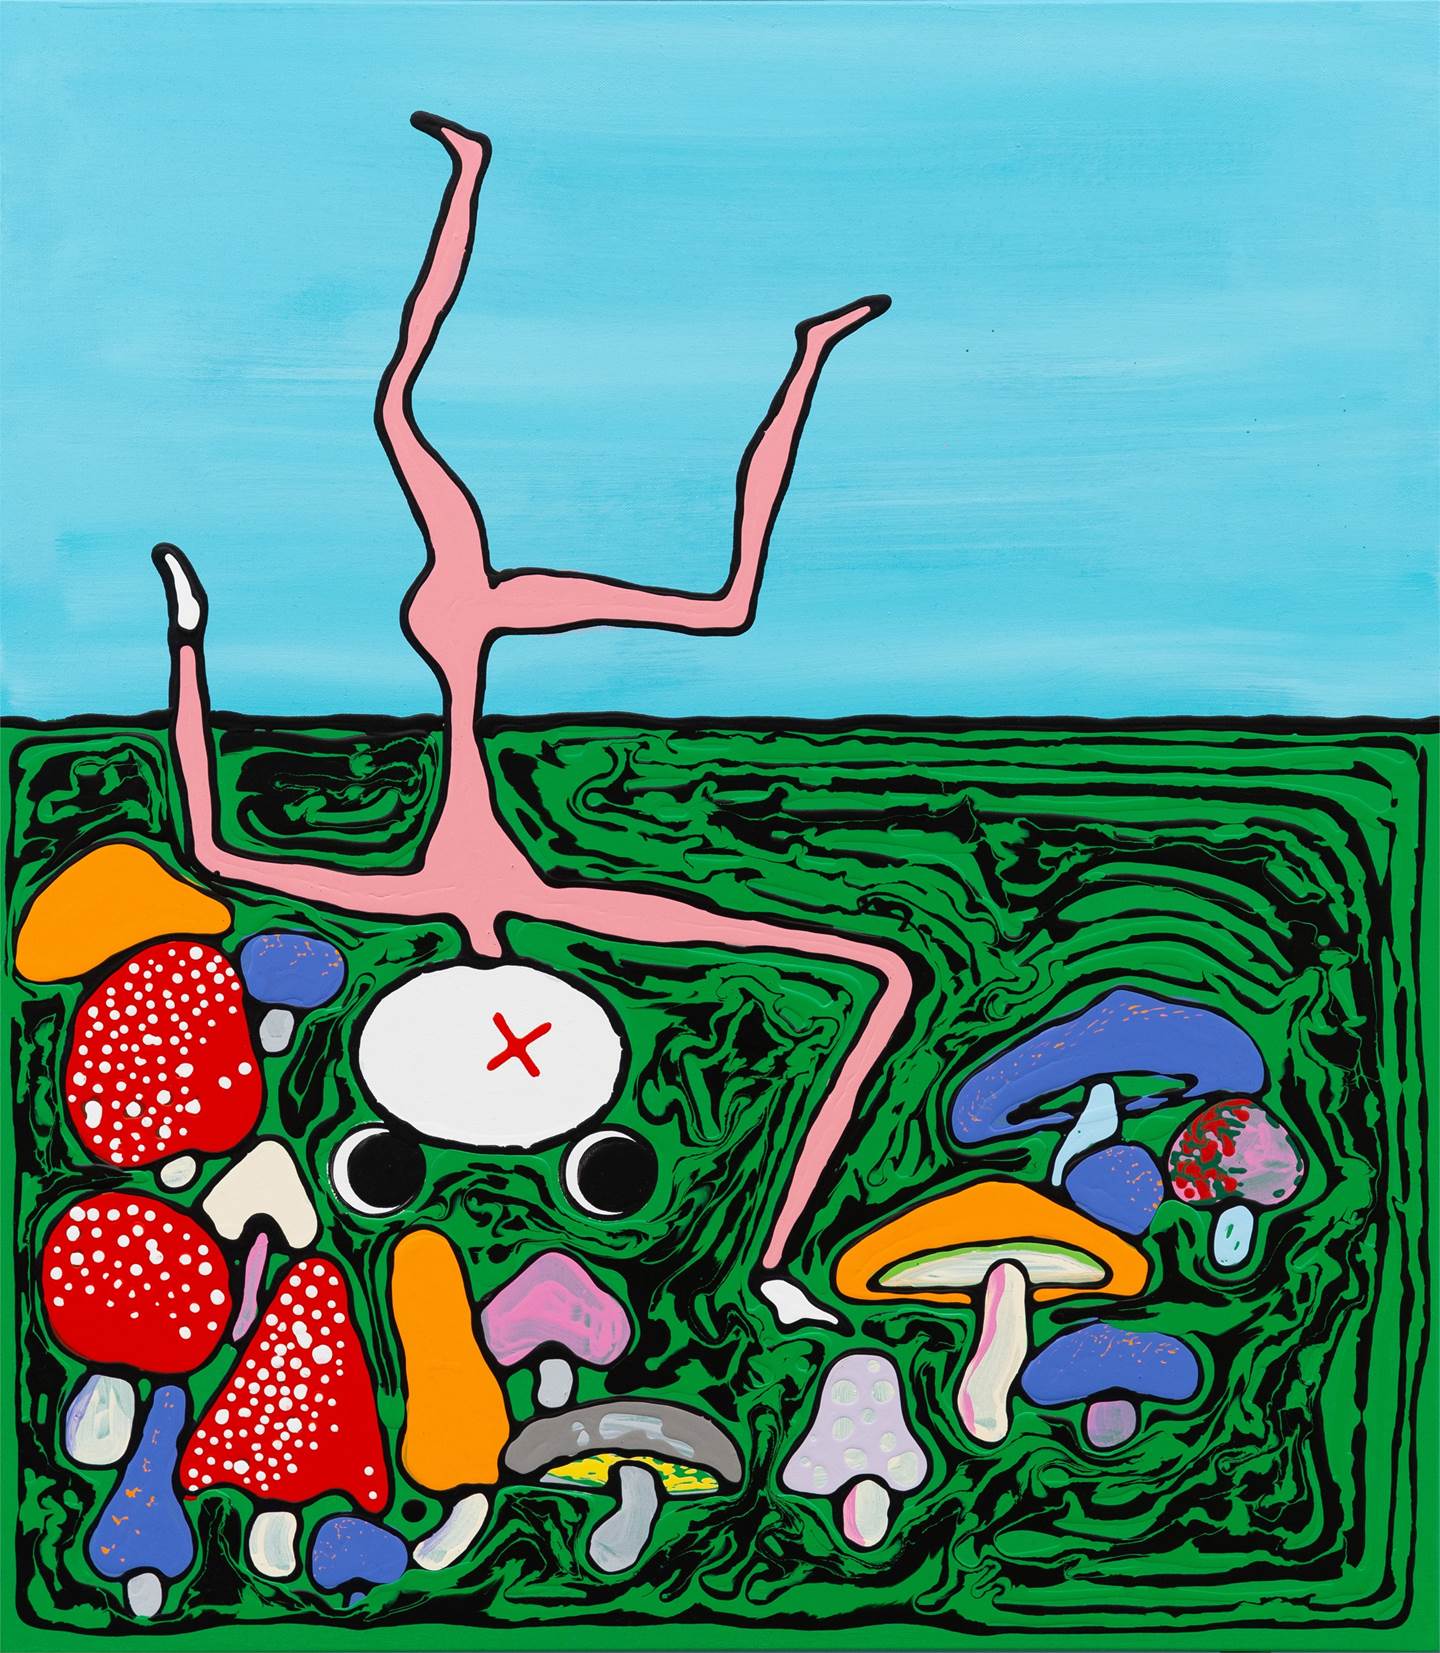 Dance with the mushrooms #2, original   Pintura de Mario Louro